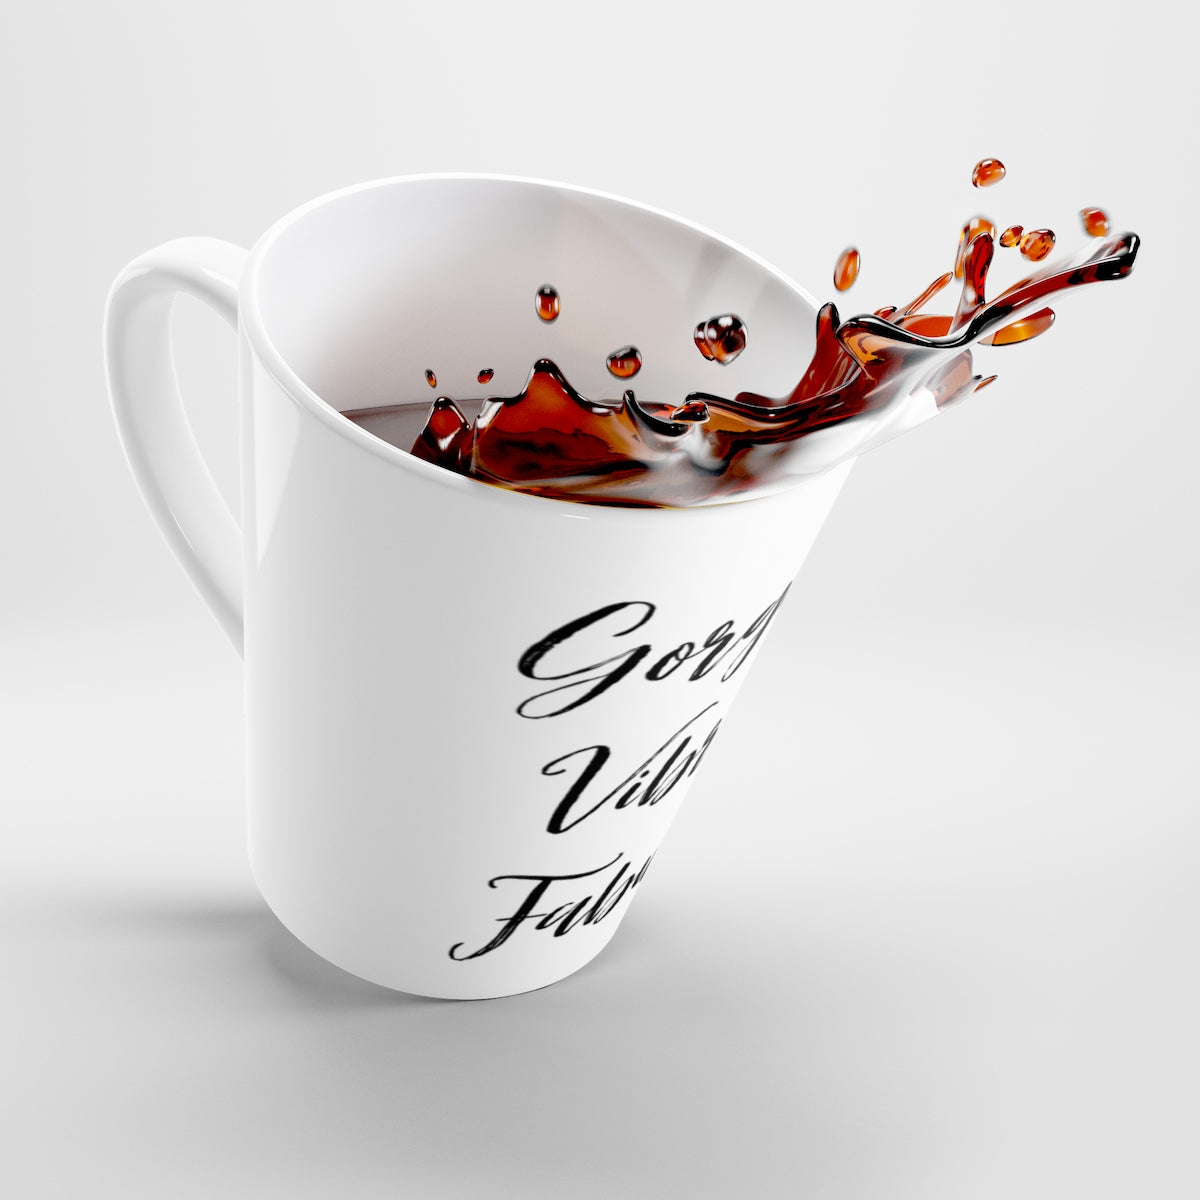 Latte/Coffe Mug